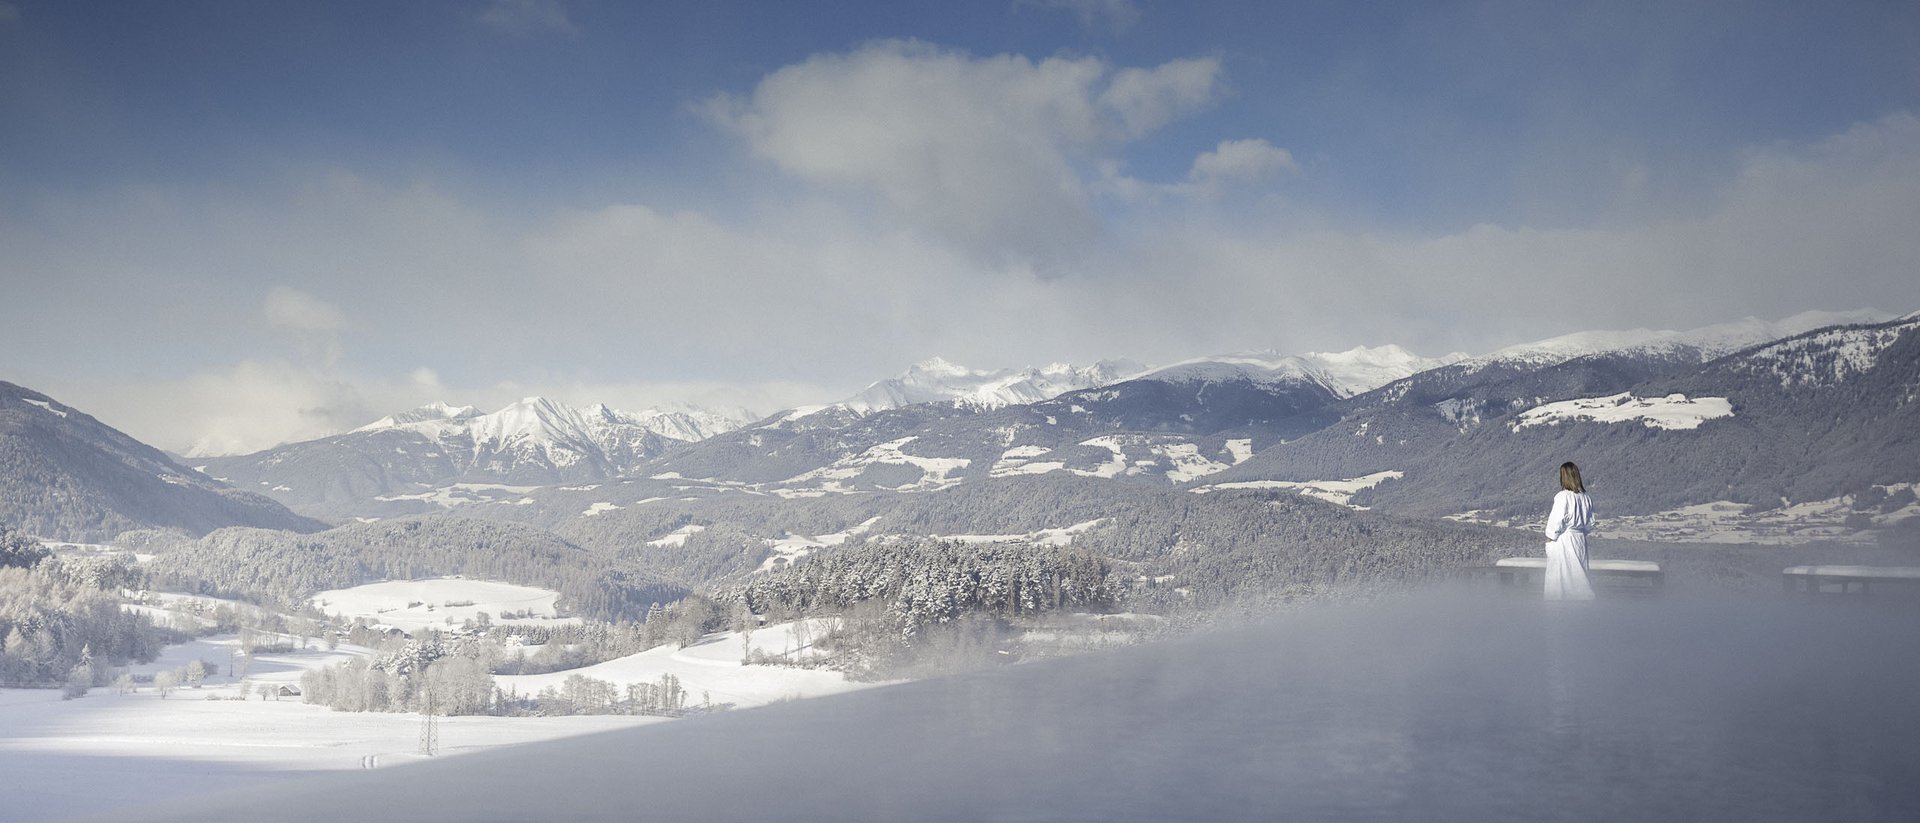 The Winklerhotels: your luxury hotels in South Tyrol